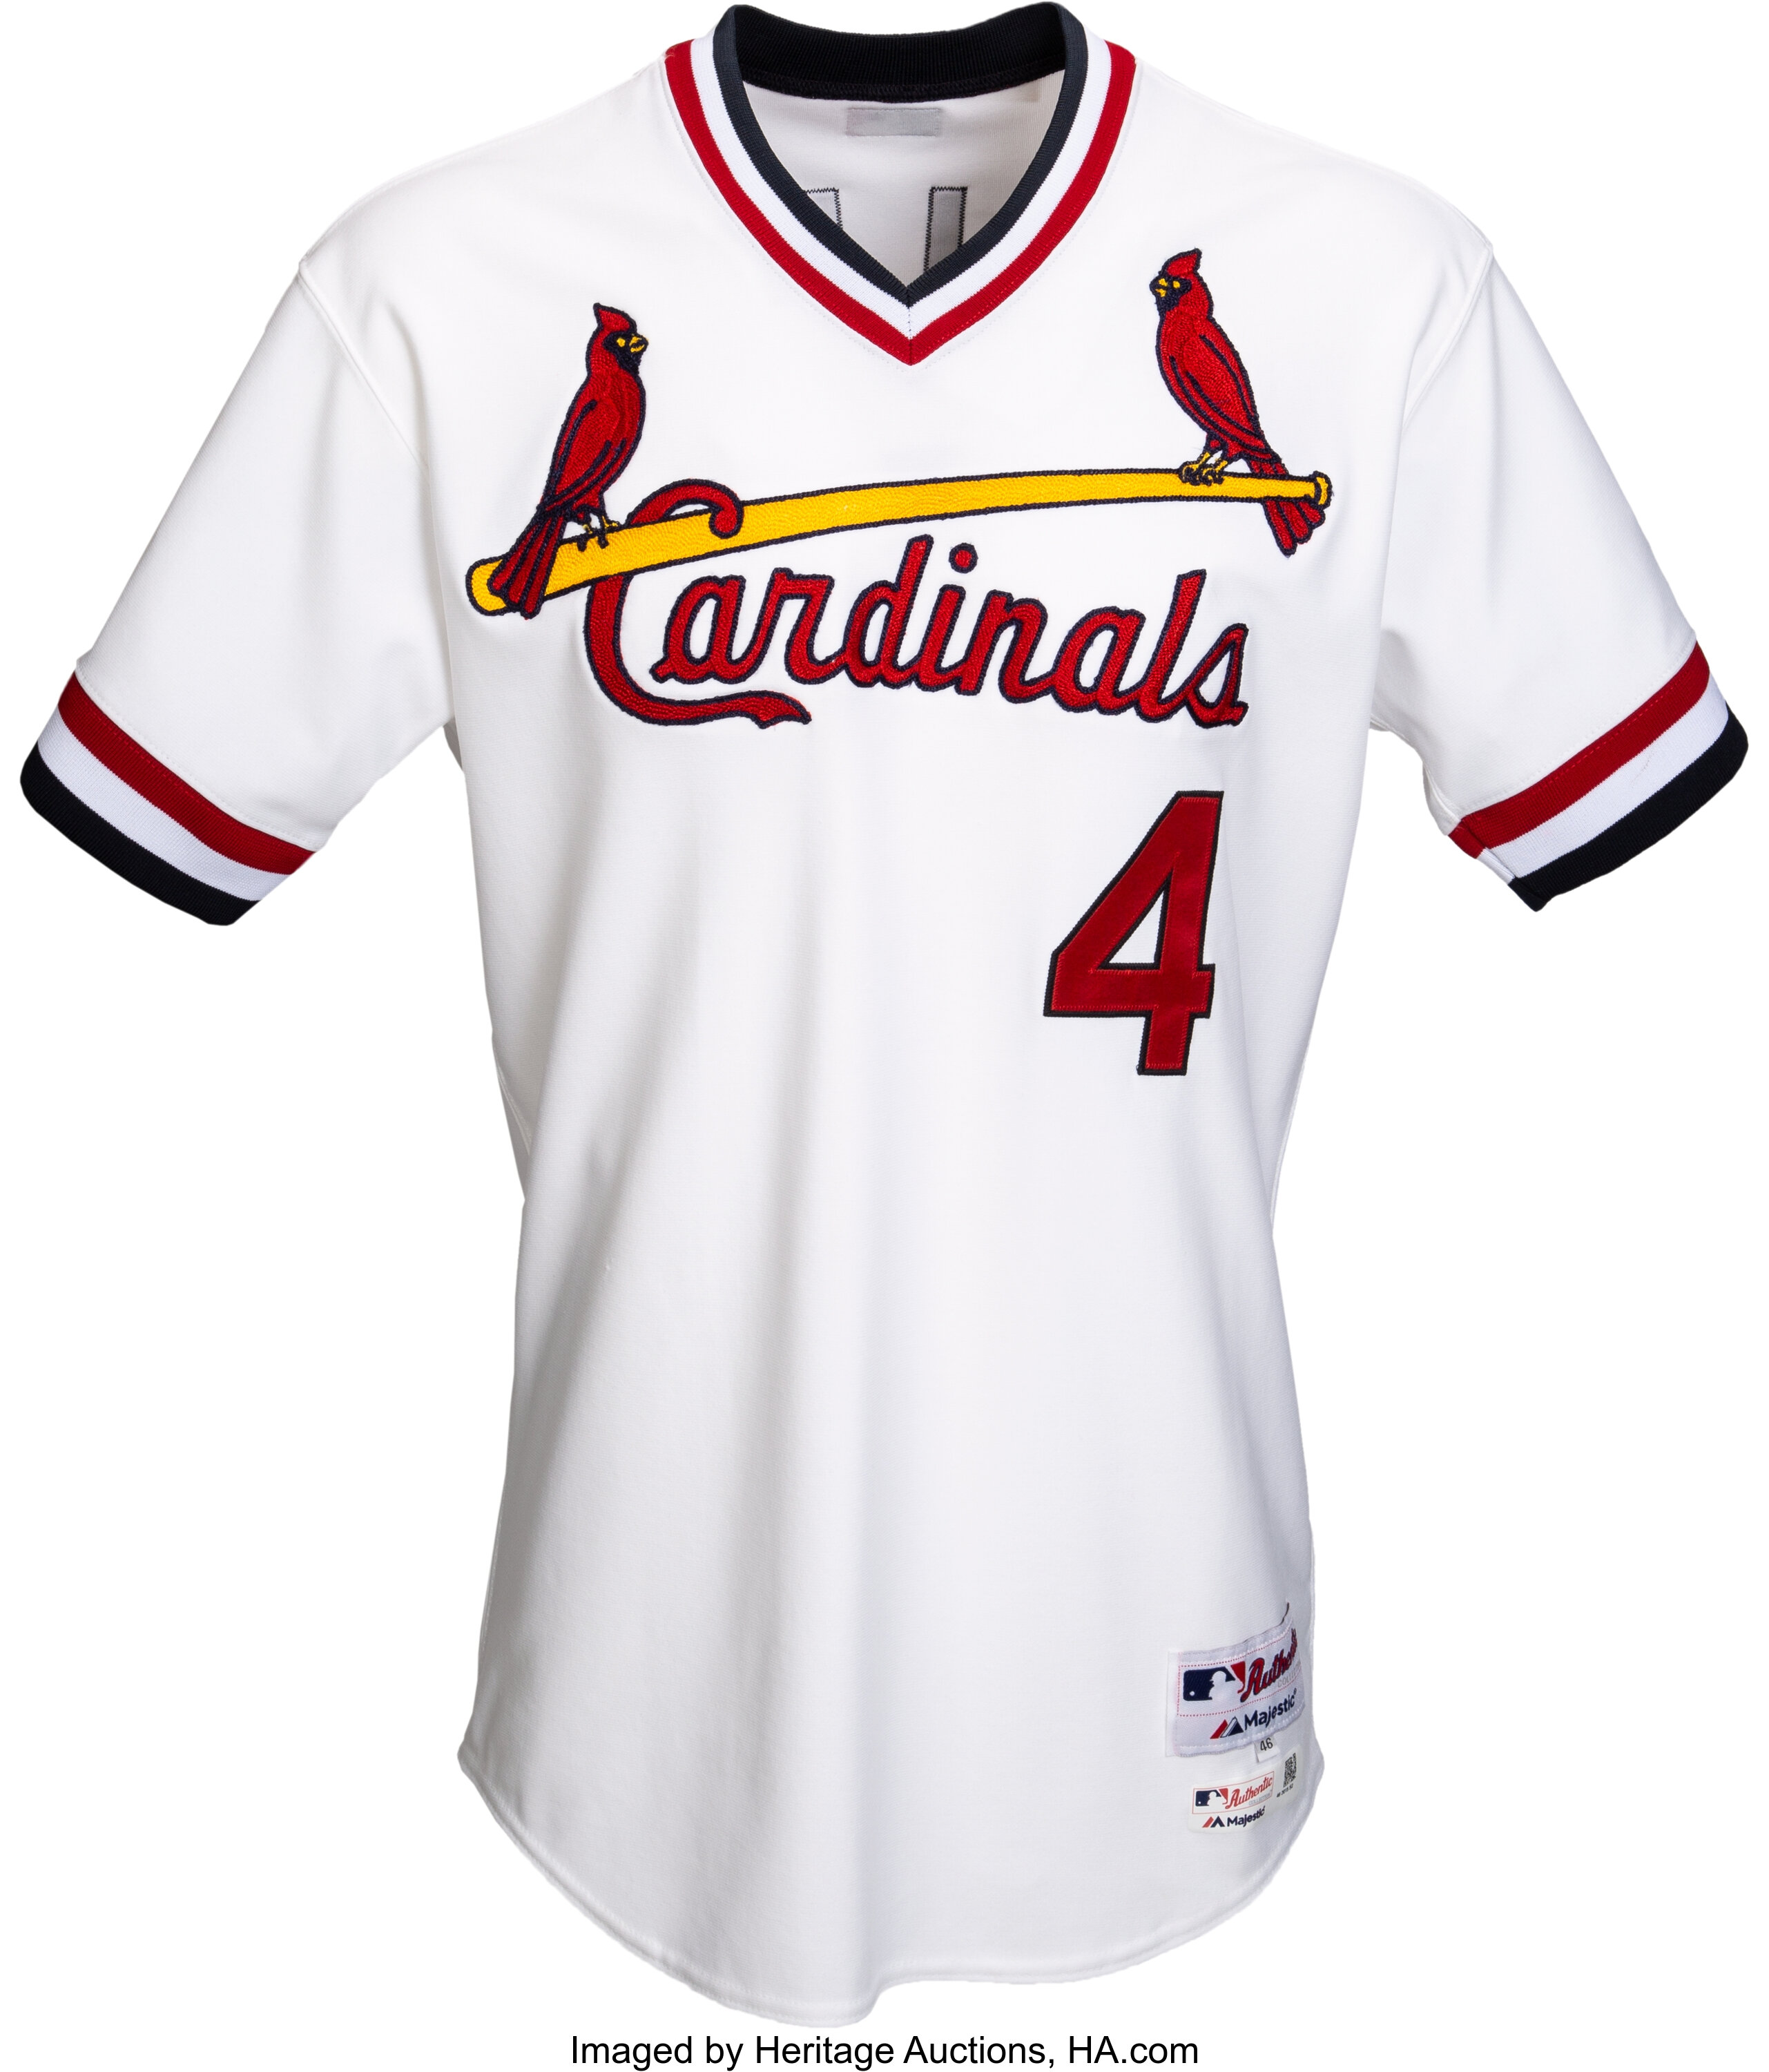 Turn Ahead The Clock – Cardinals Uniforms & Logos